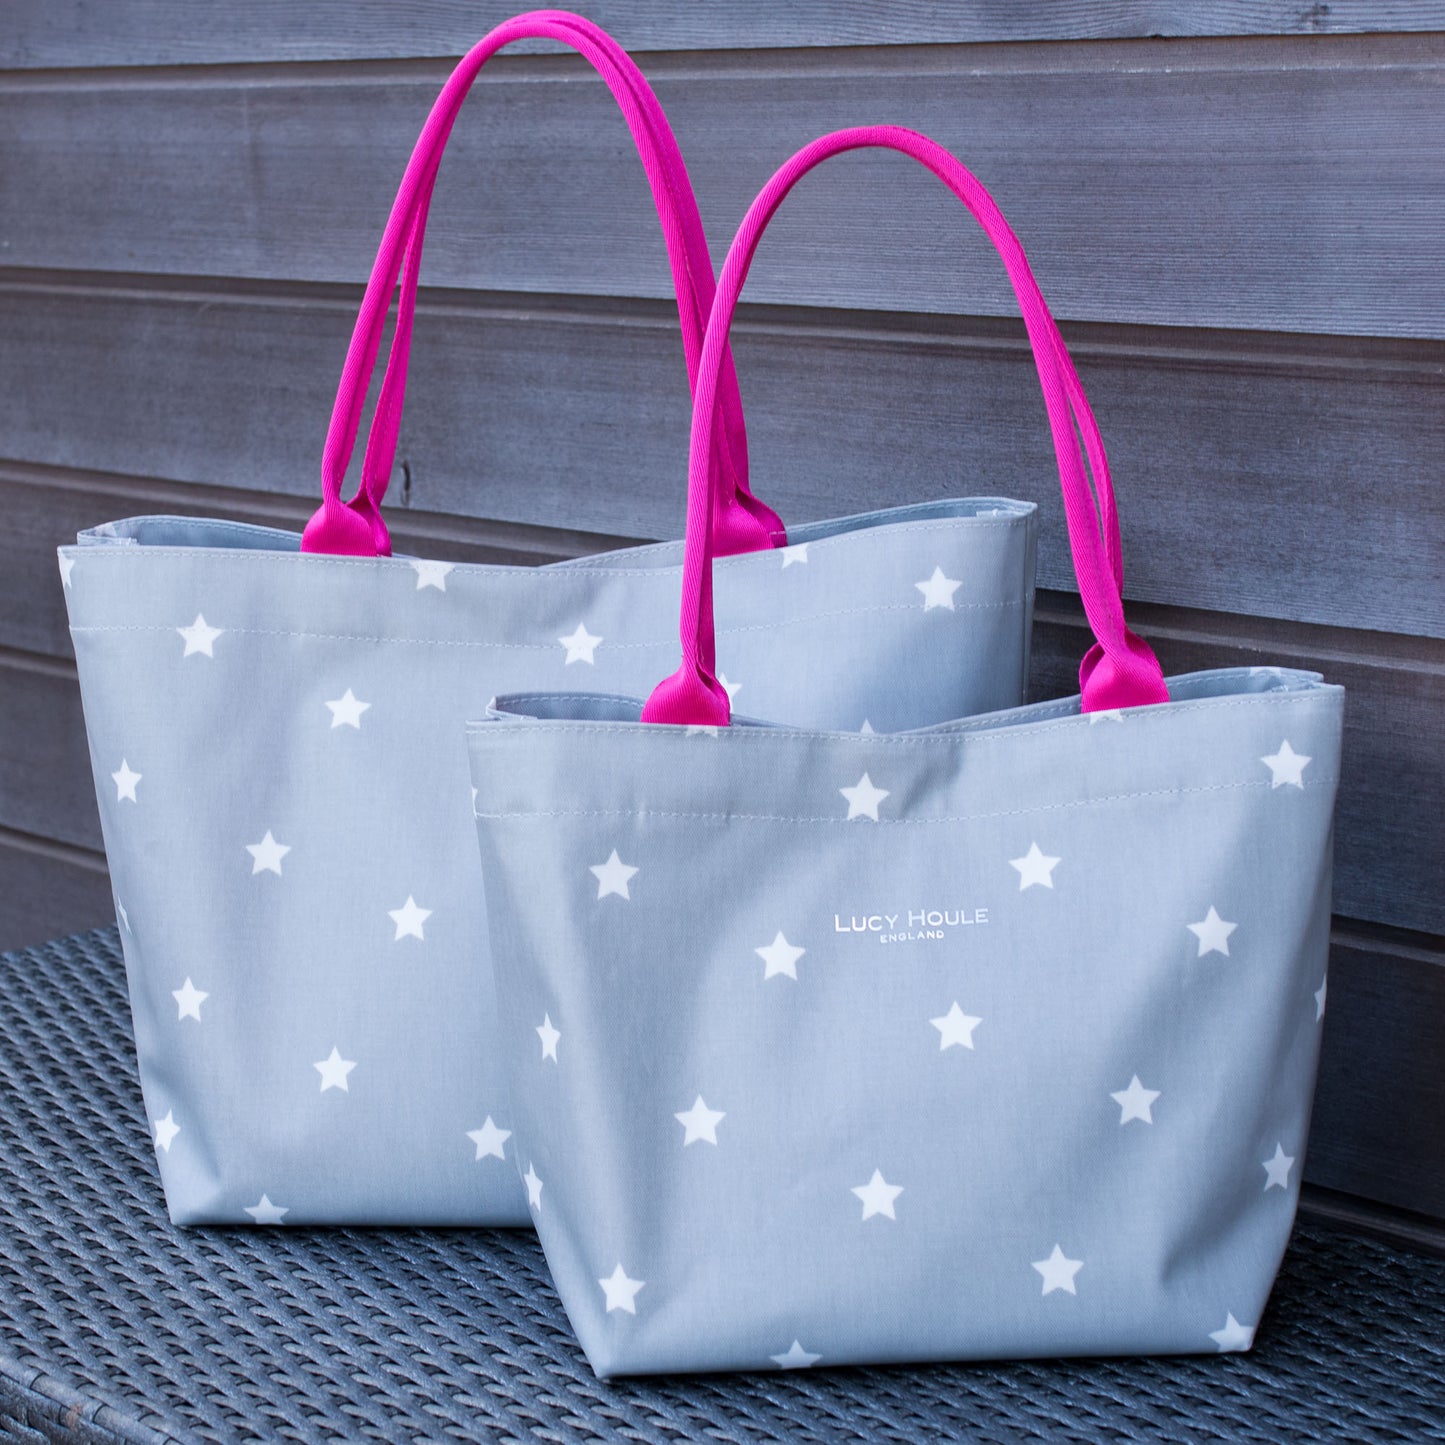 Grey & White Star Medium Tote Bag with Pink Handles